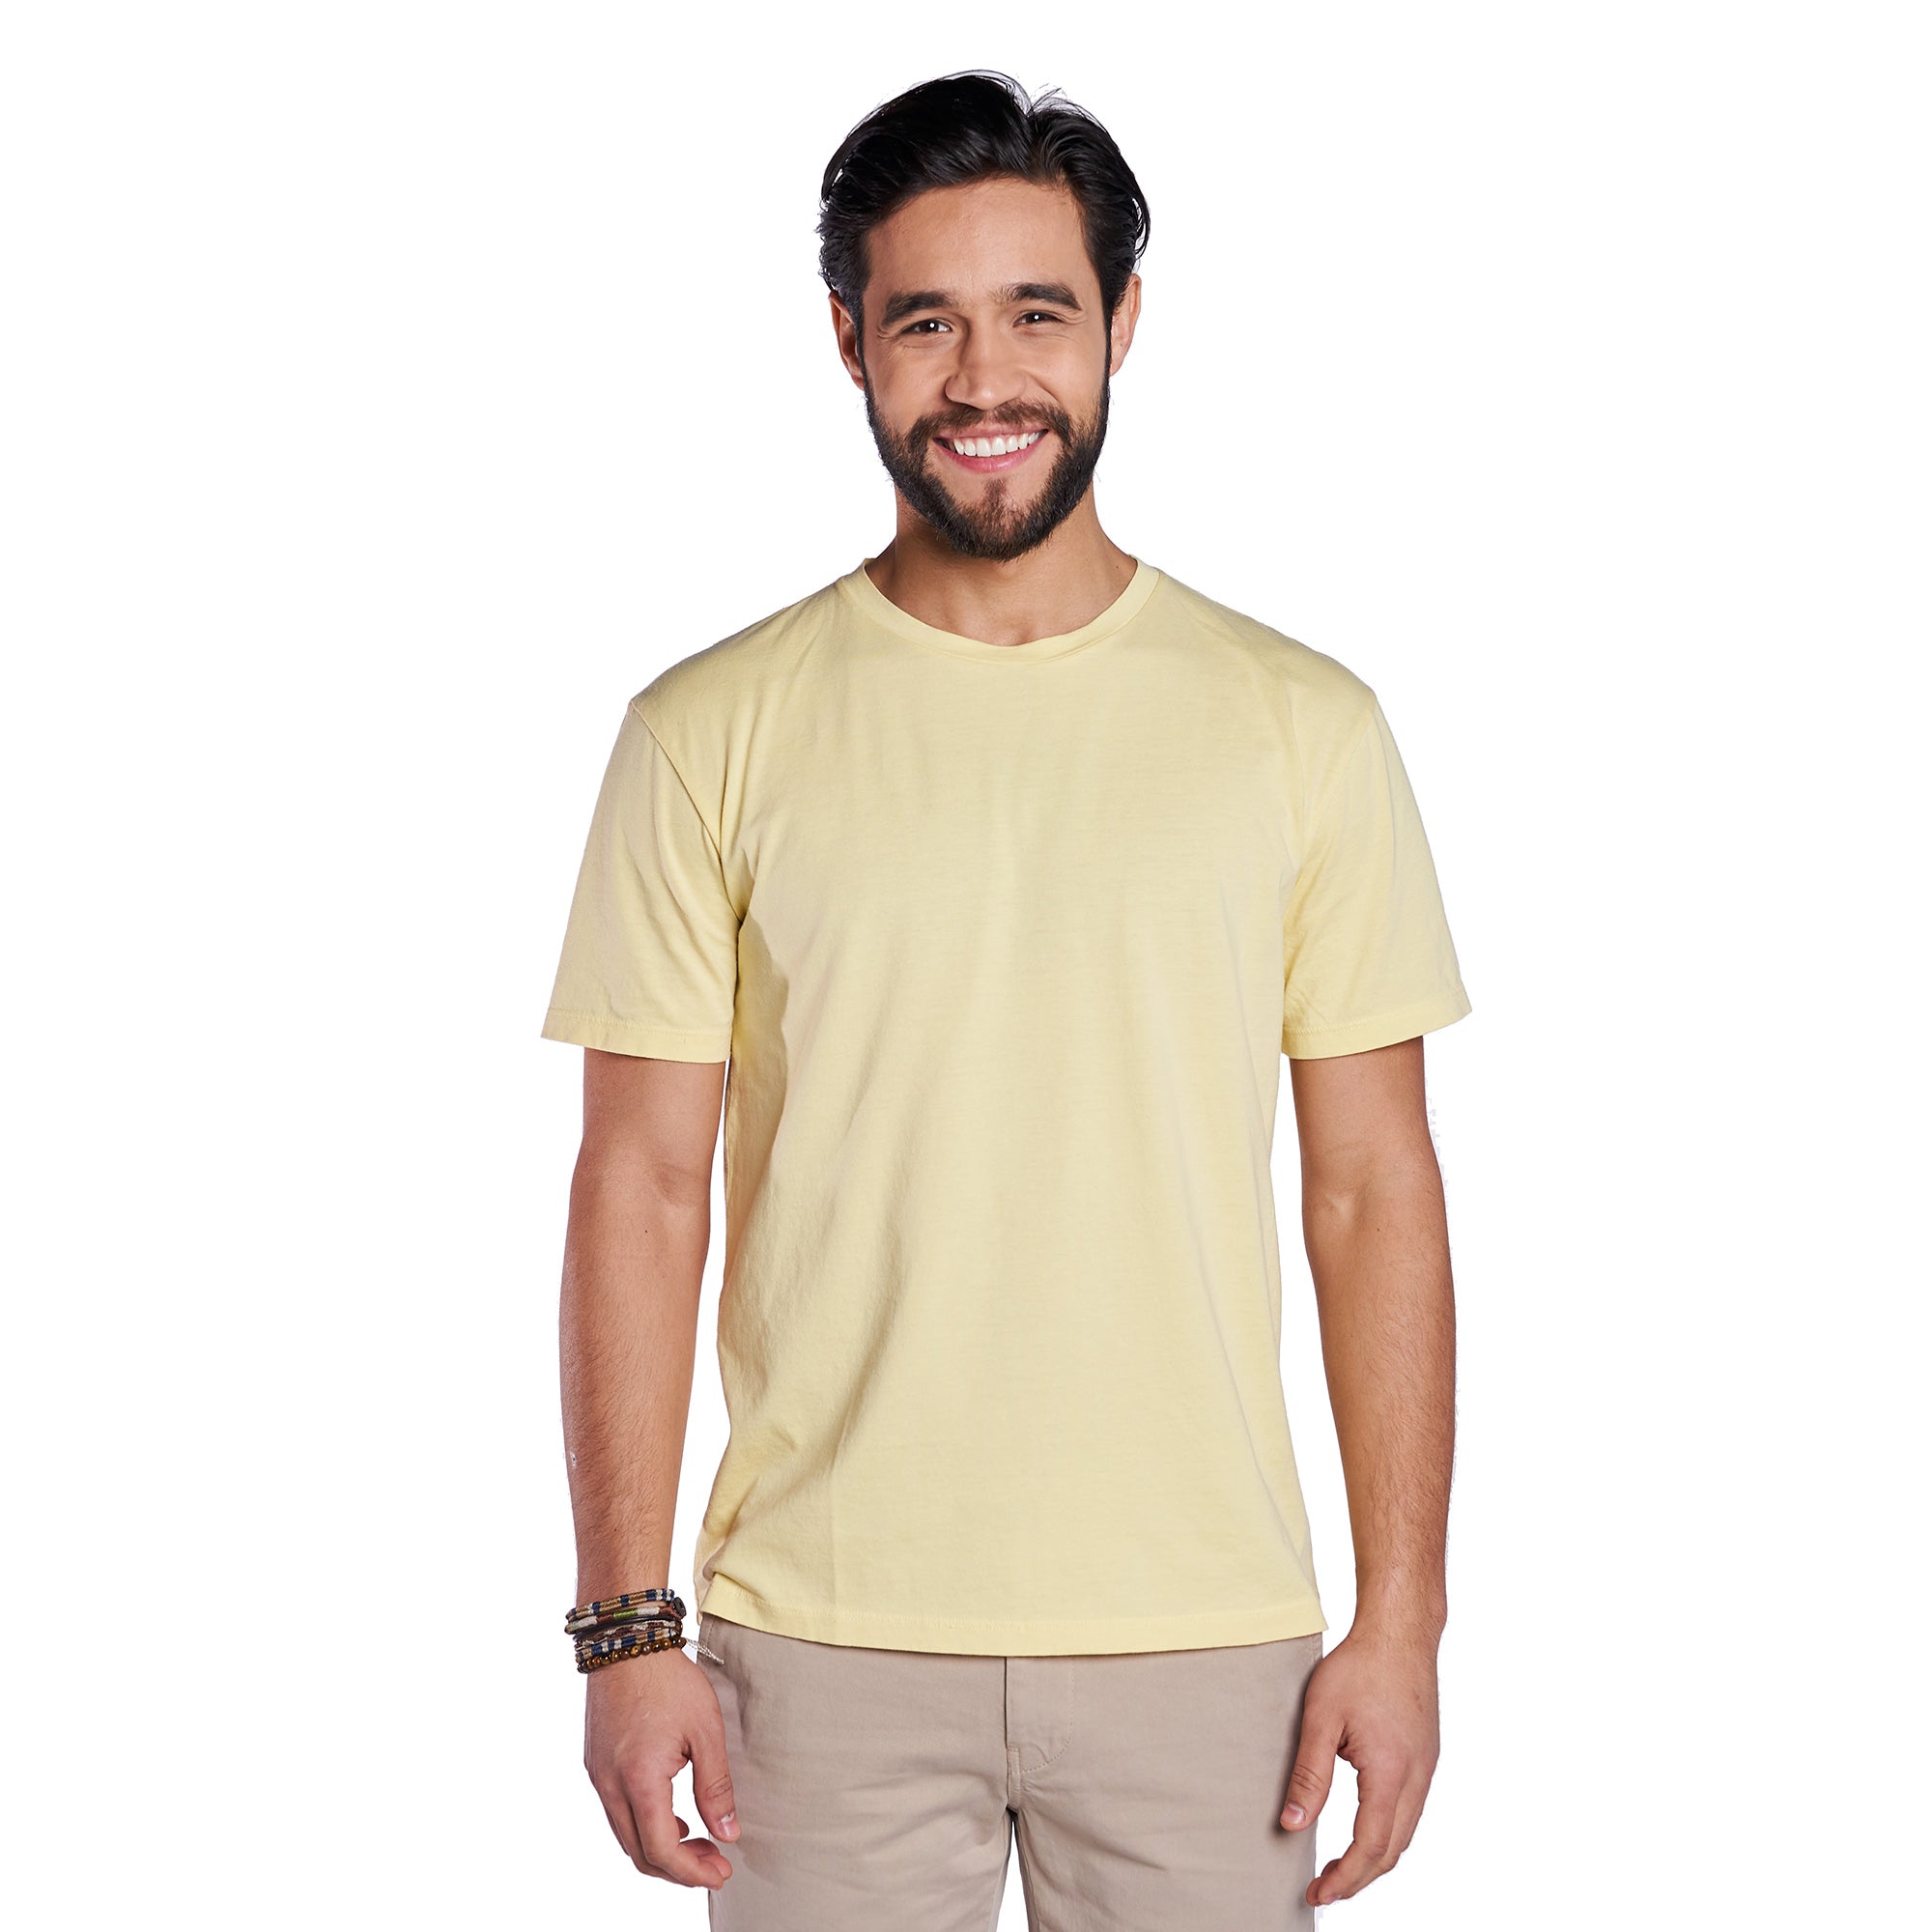 Vintage Crew T-Shirt - Pale Yellow